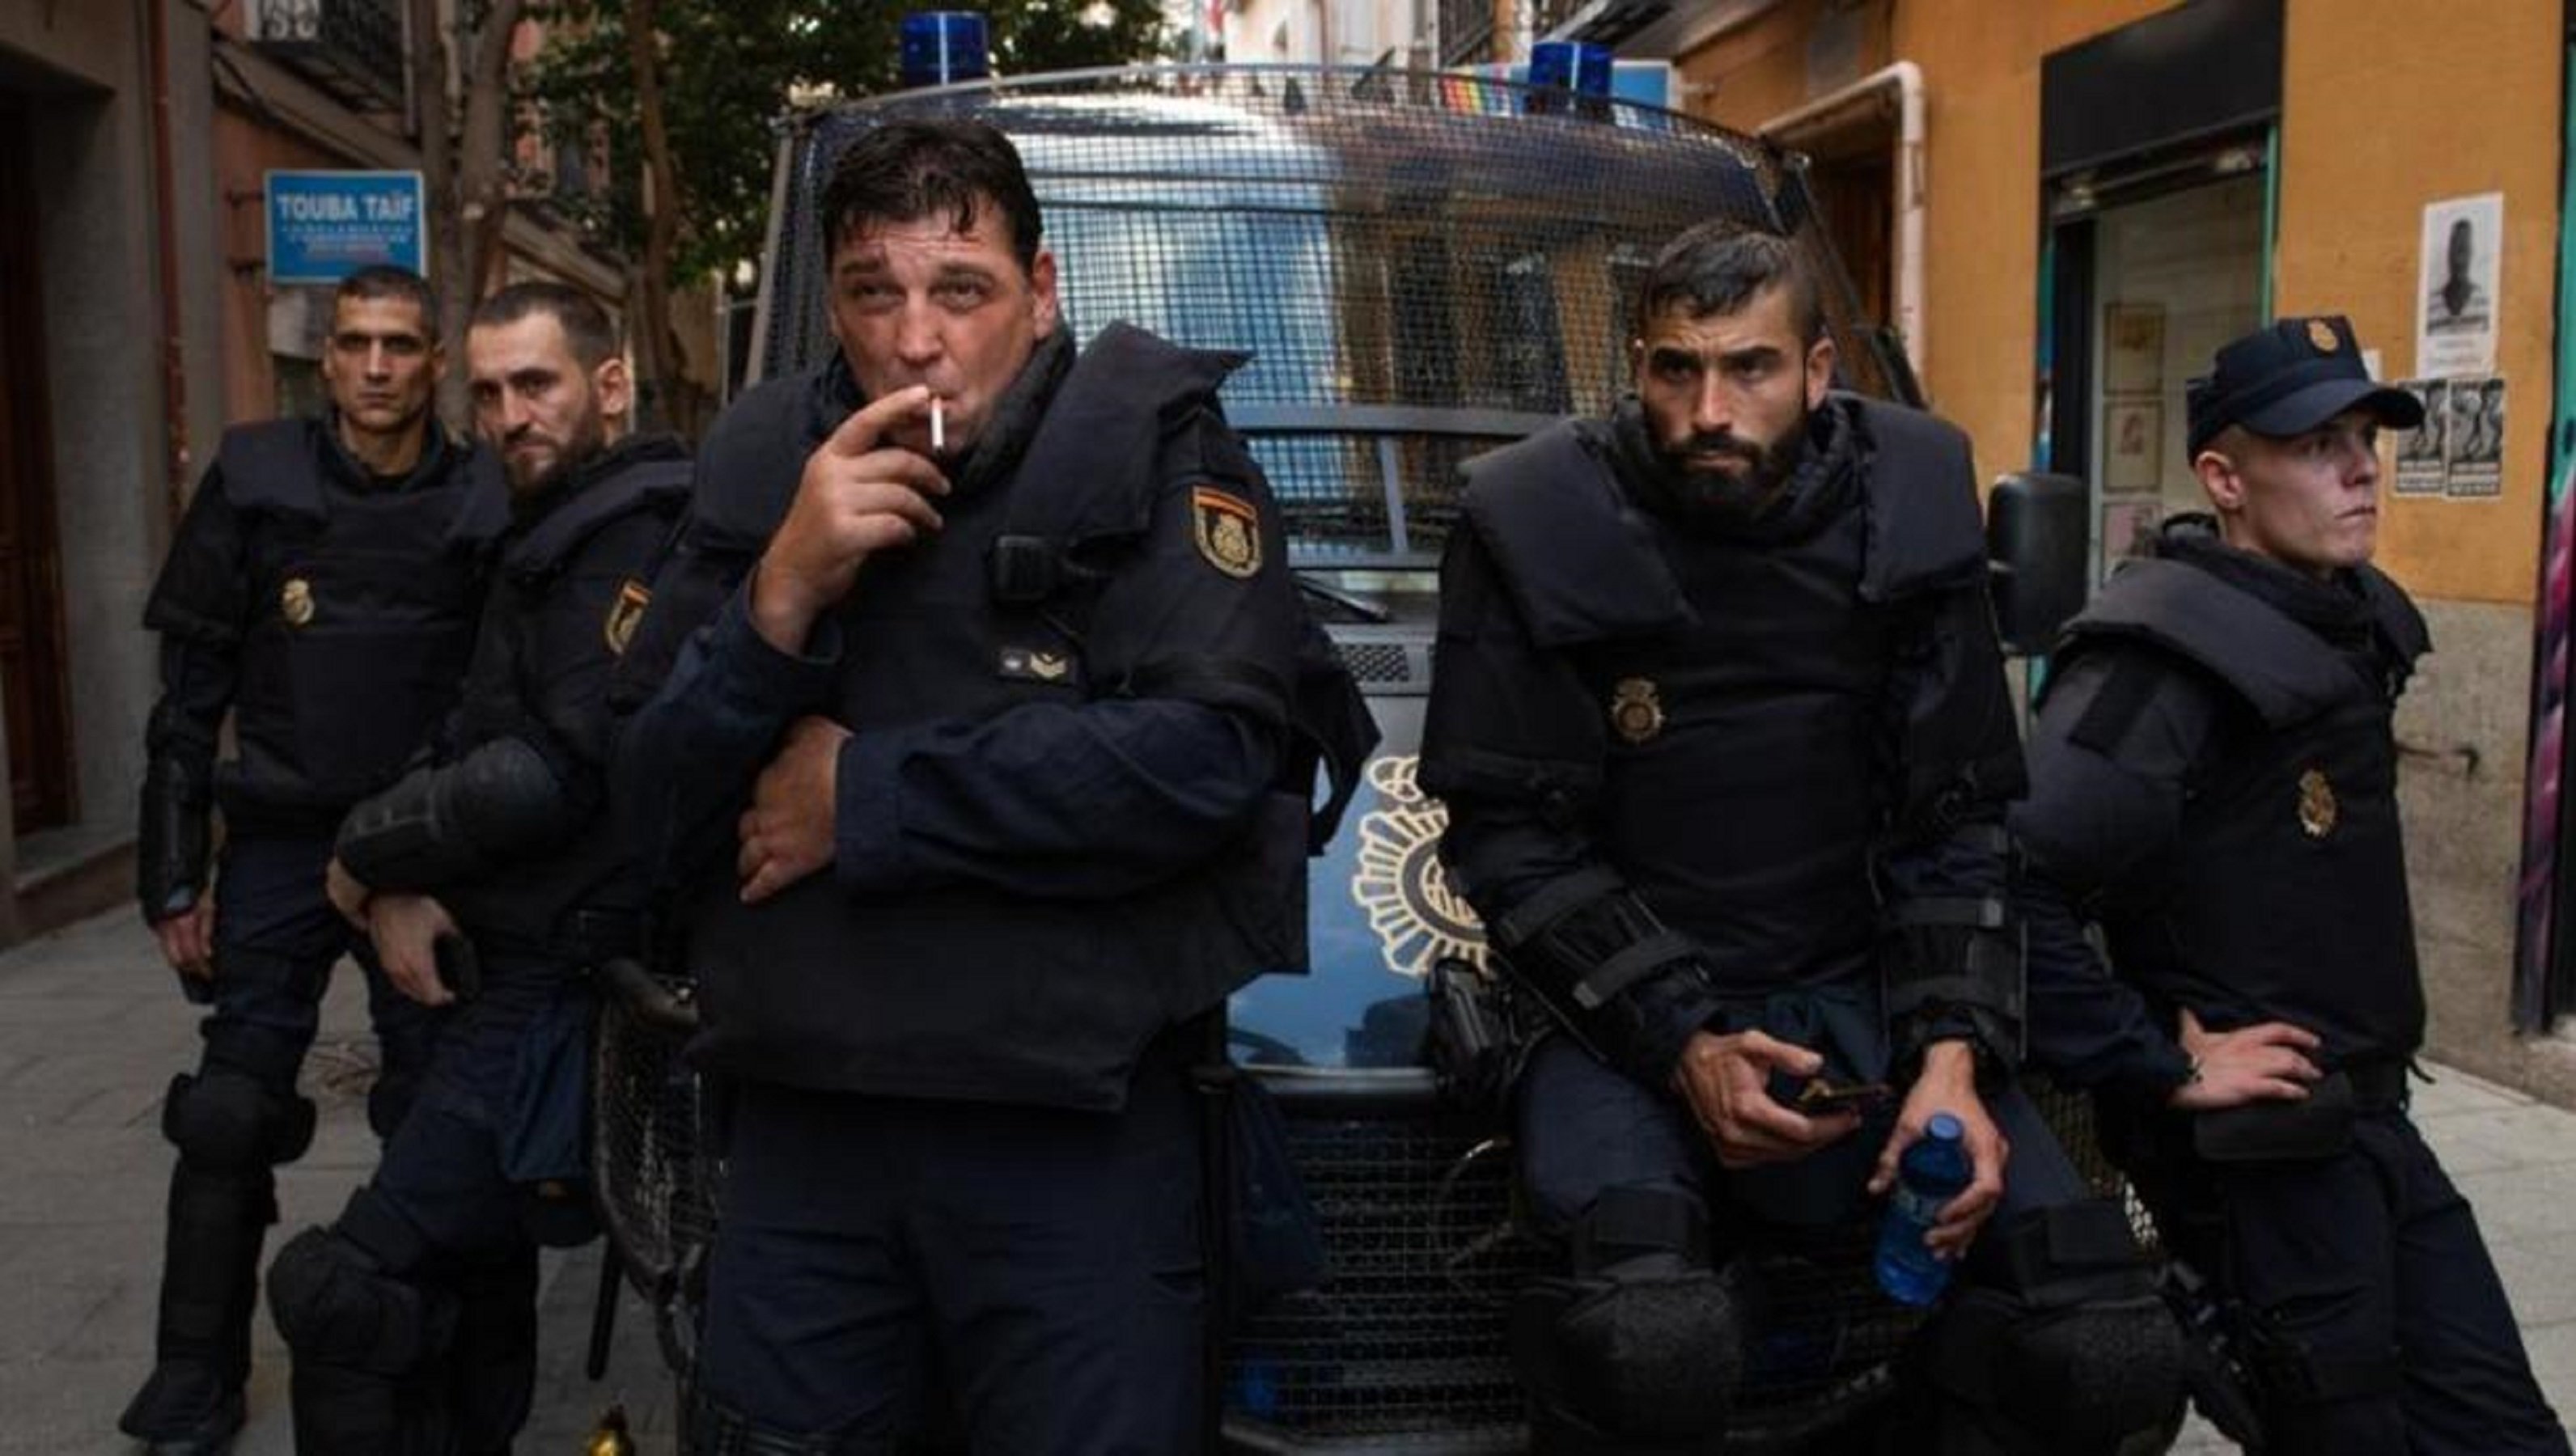 Fúria a la policia espanyola amb la sèrie 'Antidisturbios': "Auténtica basura"